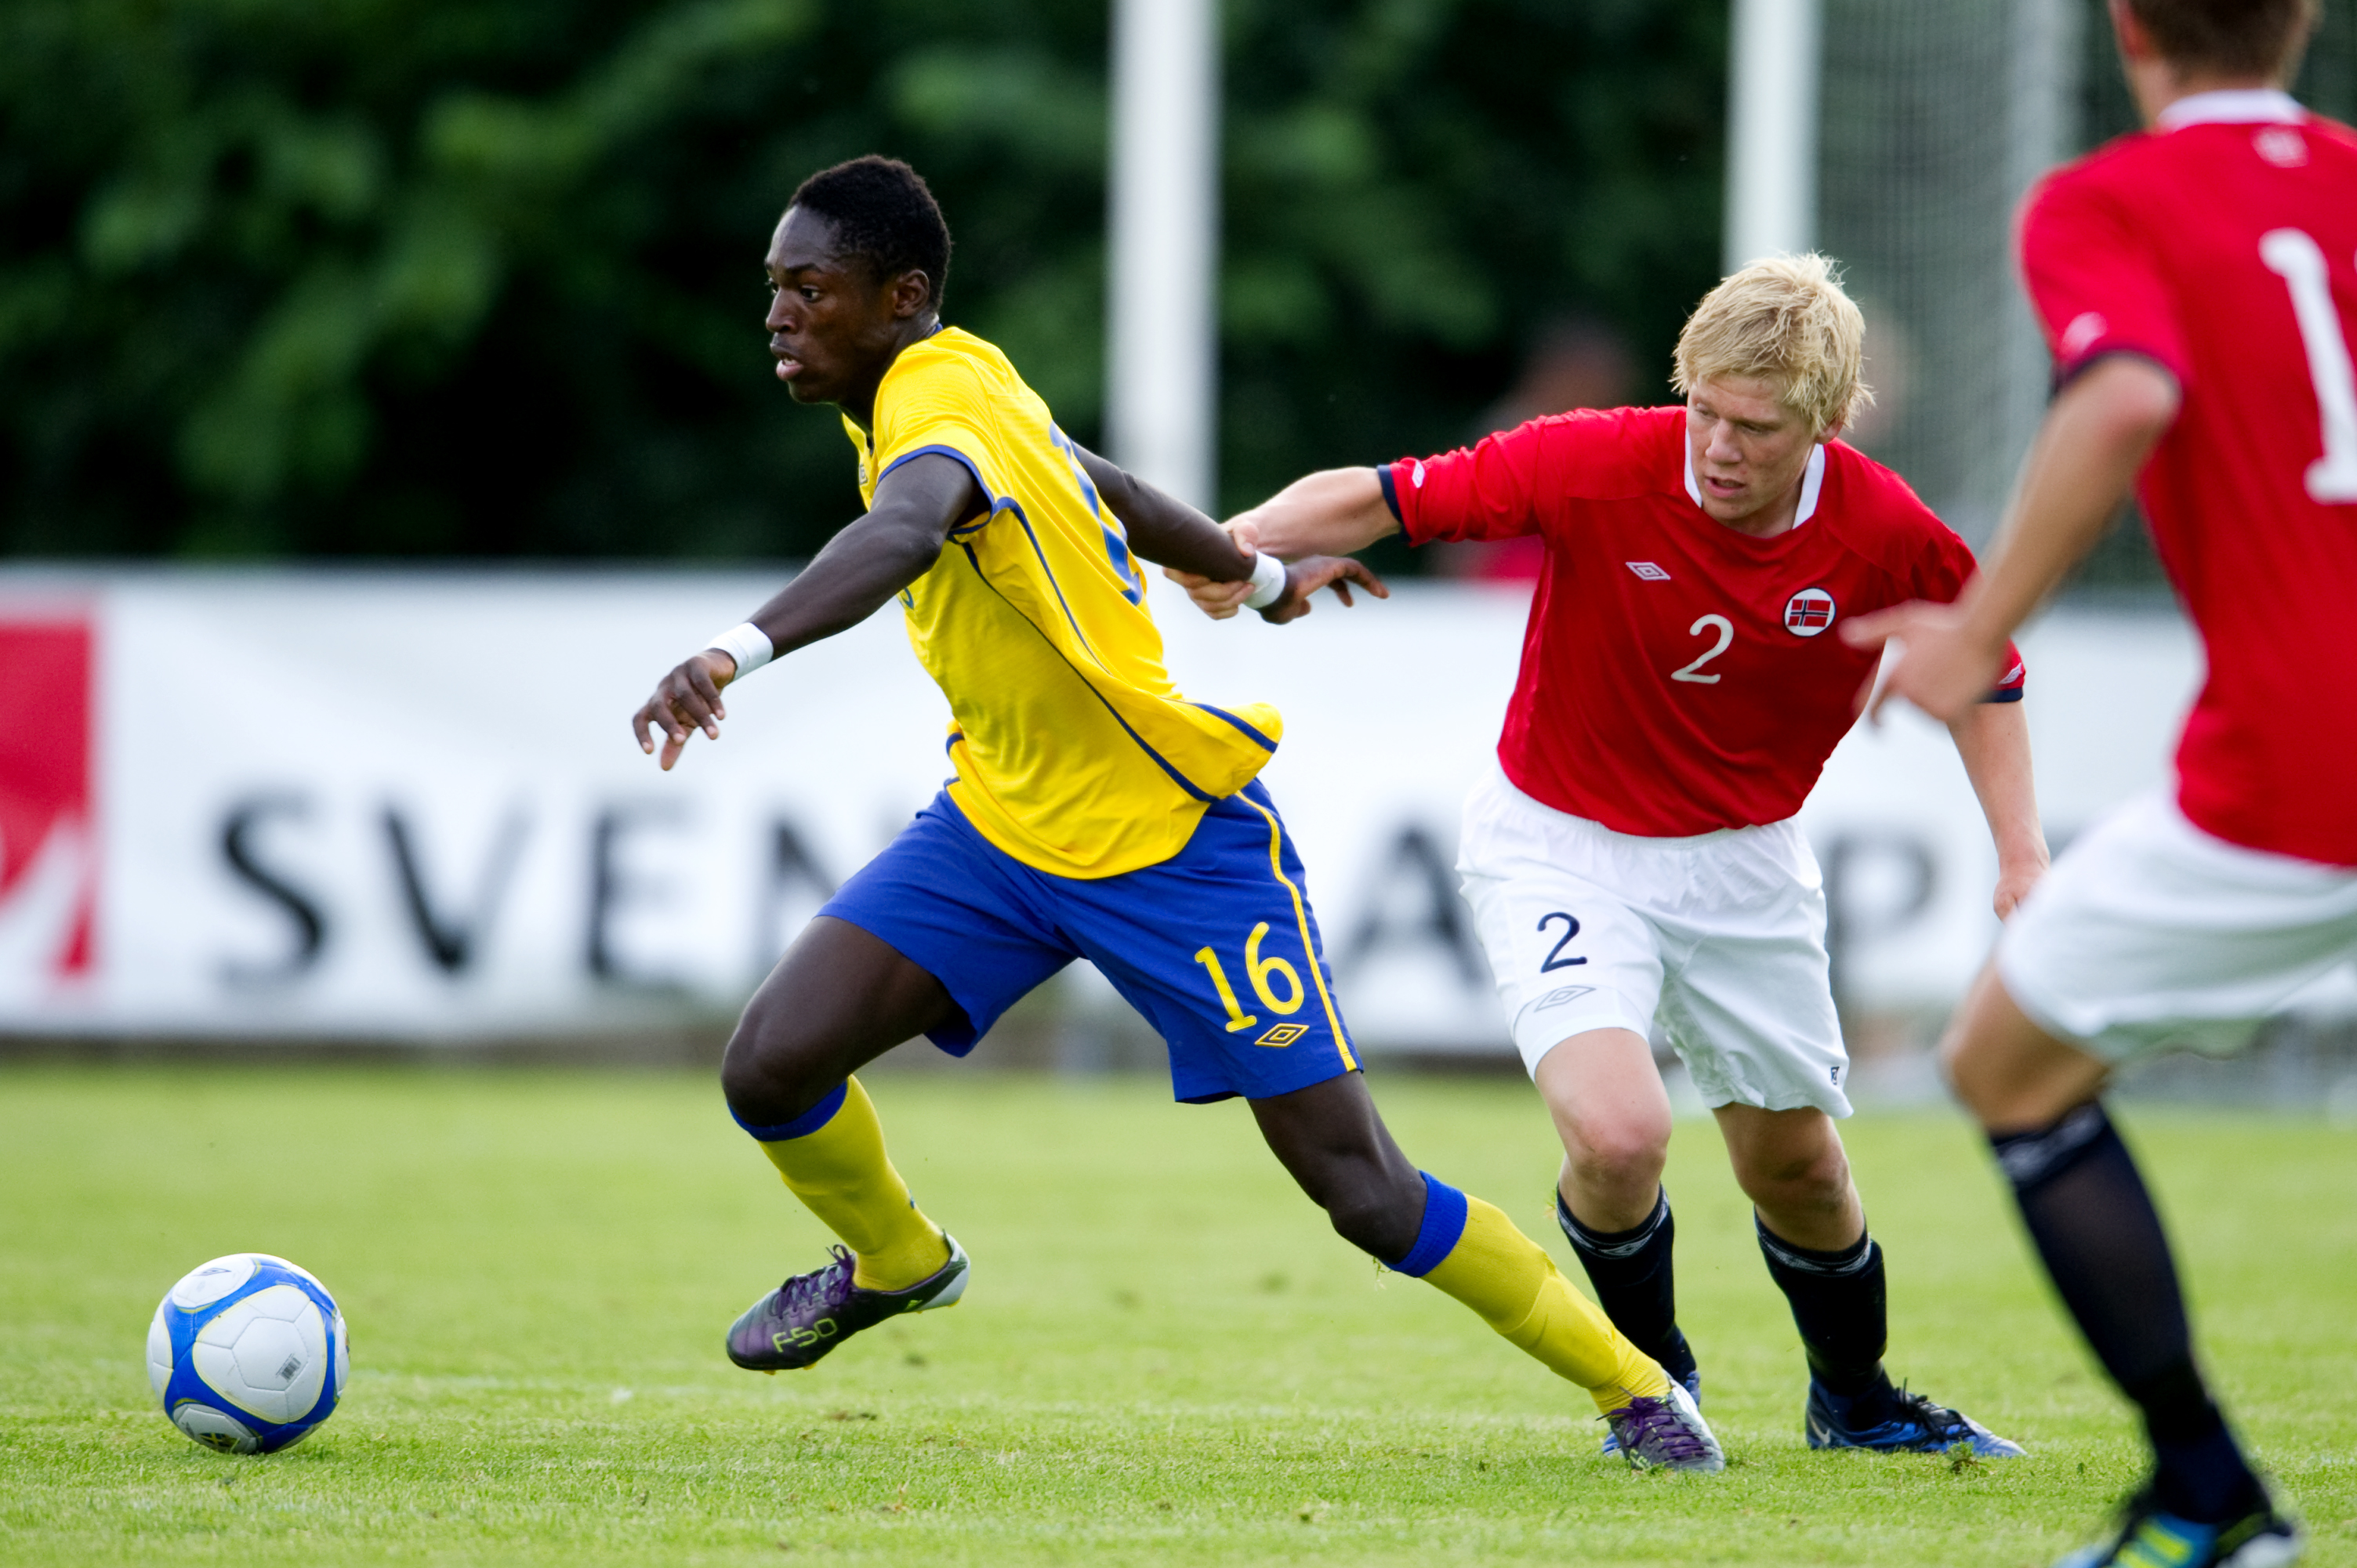 Fotboll, Edward Owusu, Teteh Bangura, Mohamed Bangura, AIK, Allsvenskan